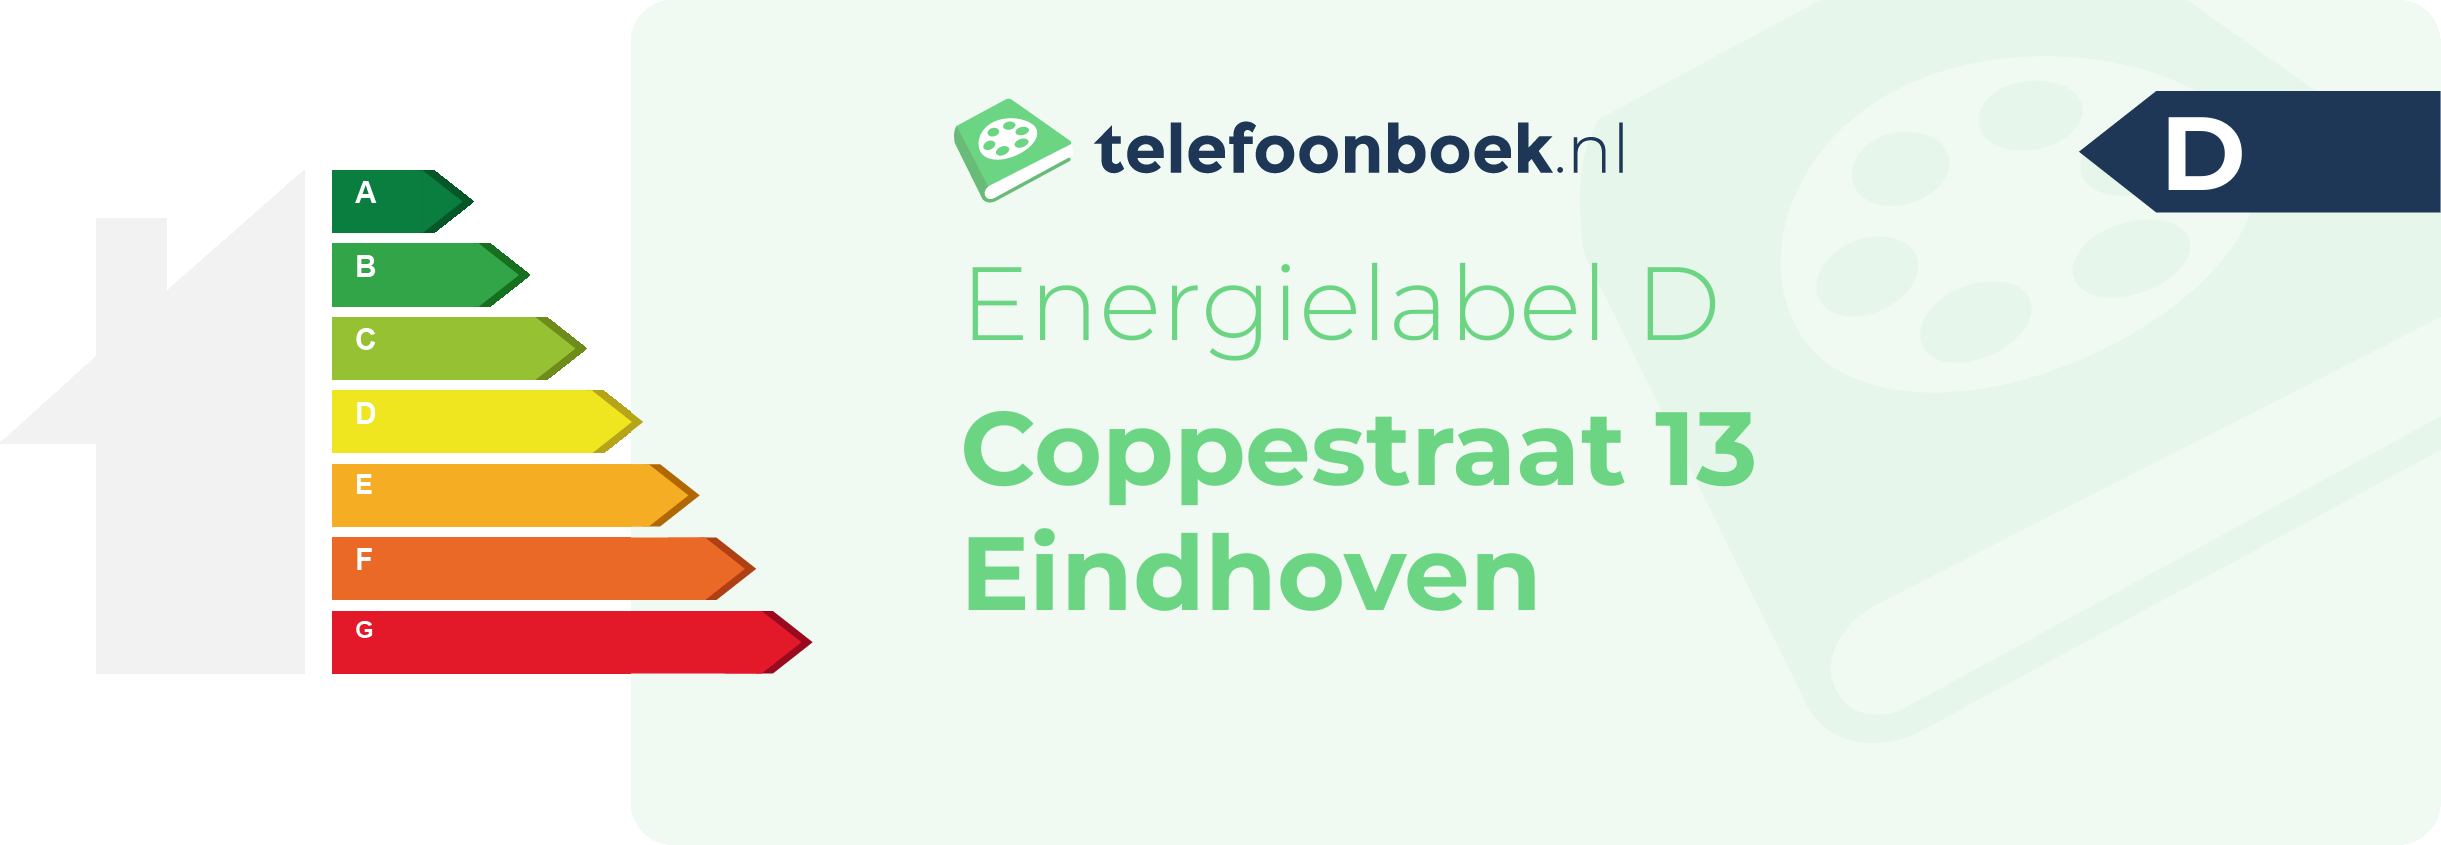 Energielabel Coppestraat 13 Eindhoven